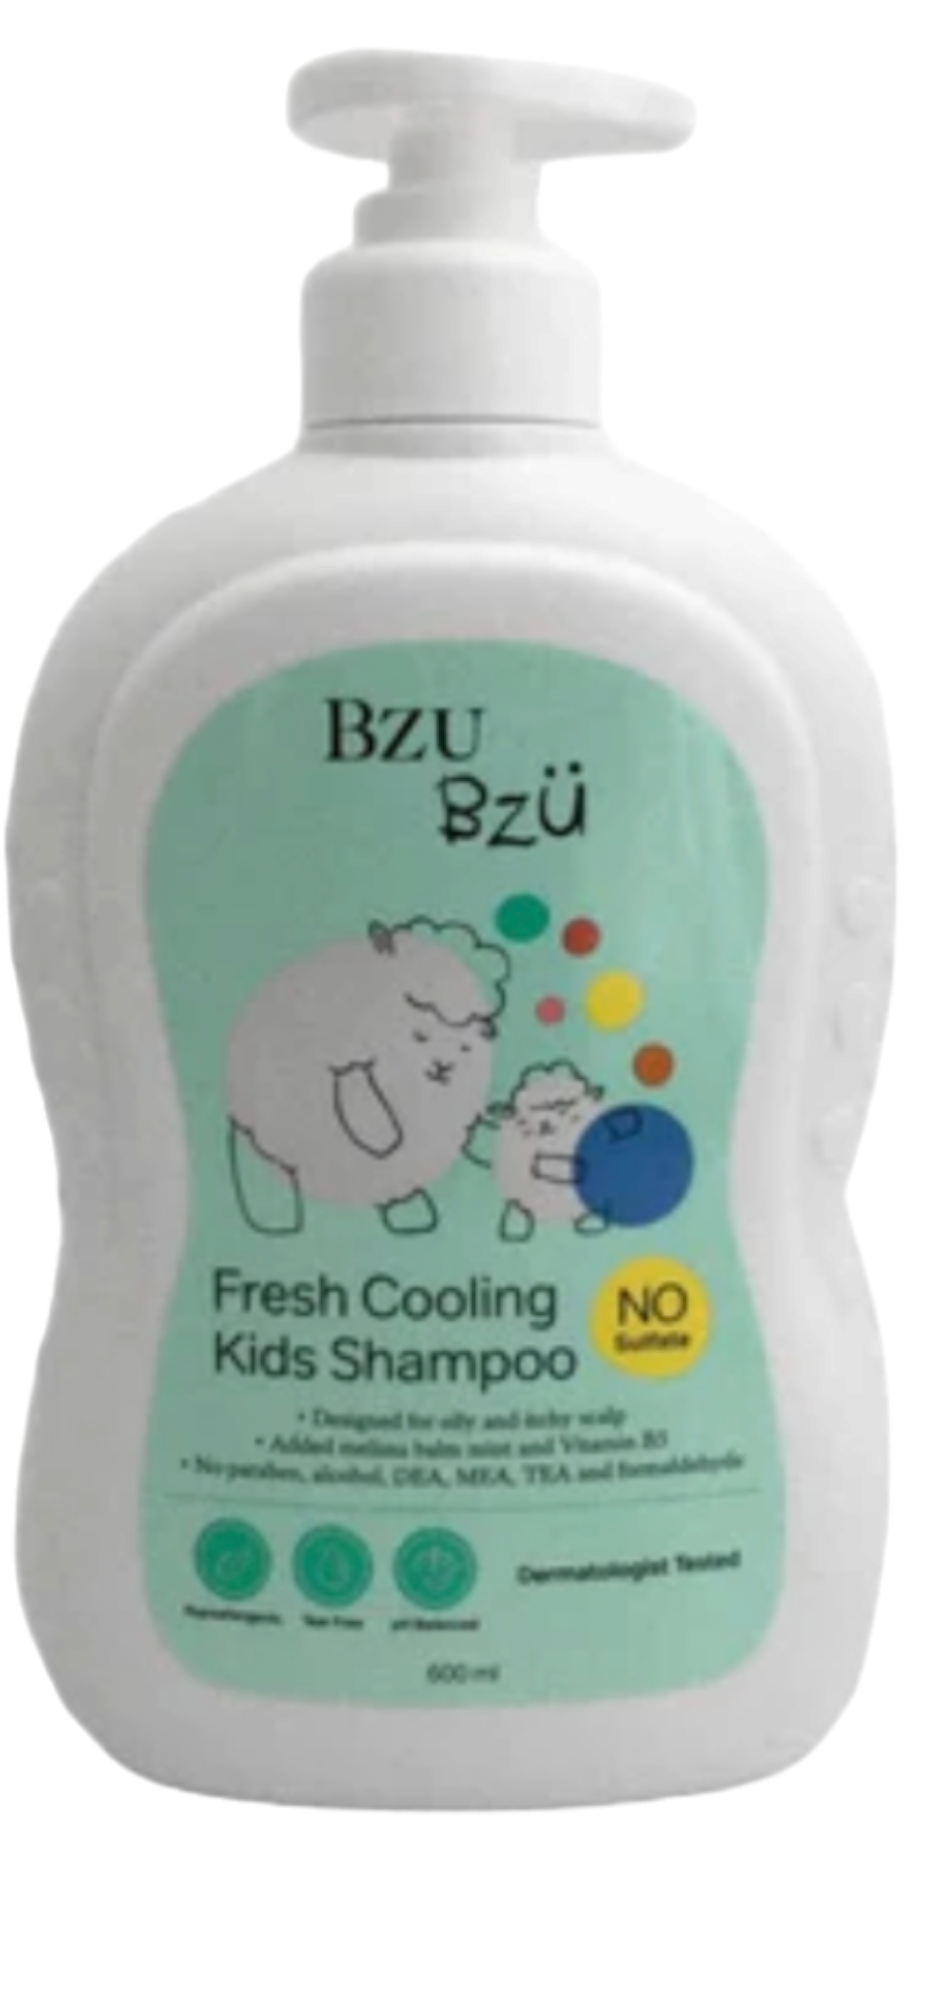 BZU BZU FRESH COOLING KIDS SHAMPOO 600ML